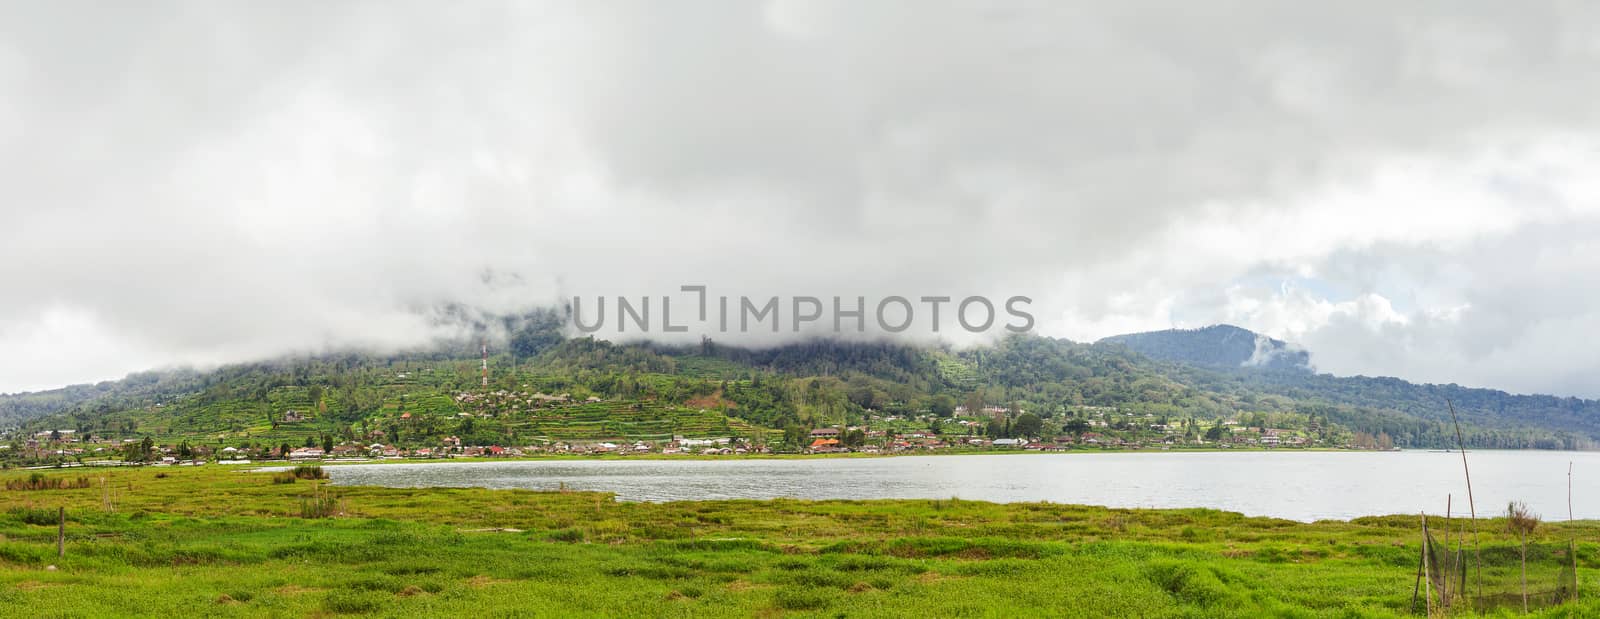 Panorama view on agricultural fields near Batur volcano, Kintamani. Winter rainy and cloudy season. Bali, Indonesia. by aksenovko